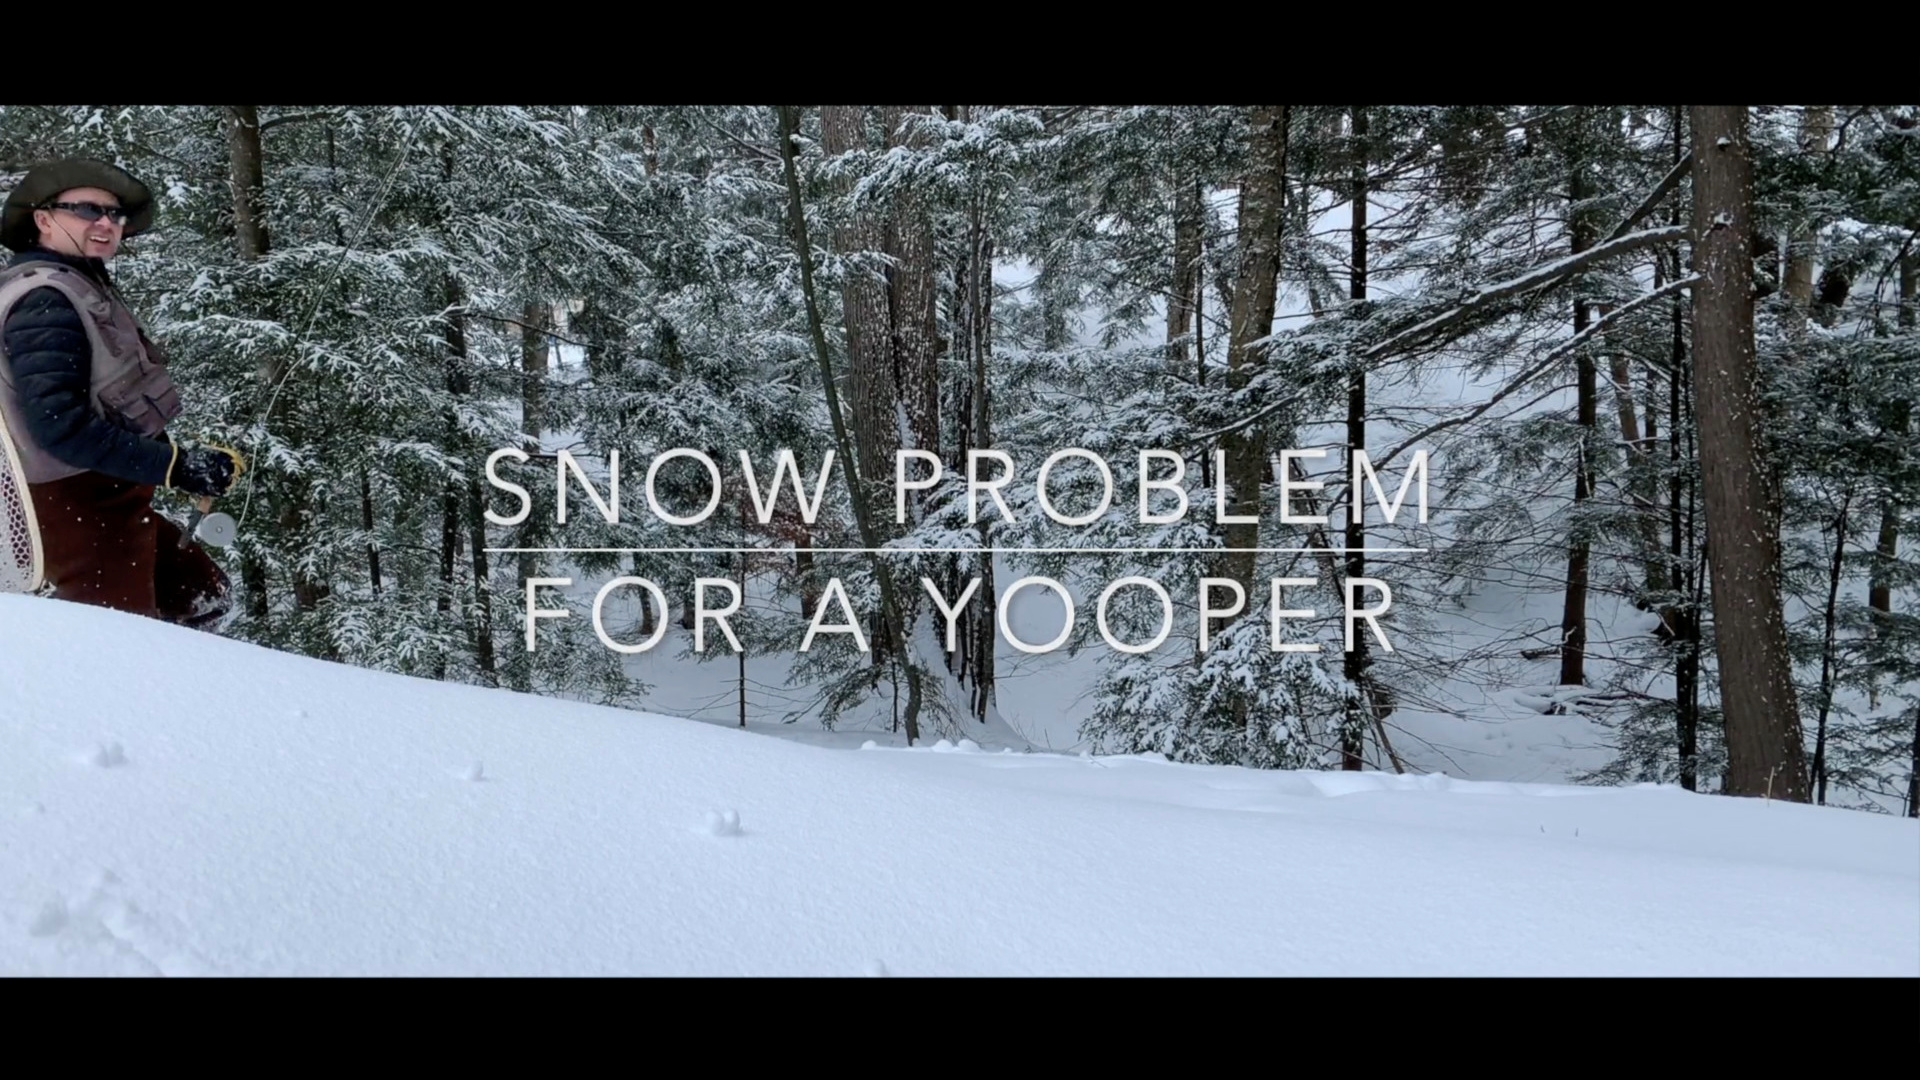 Snow Problem for a Yooper